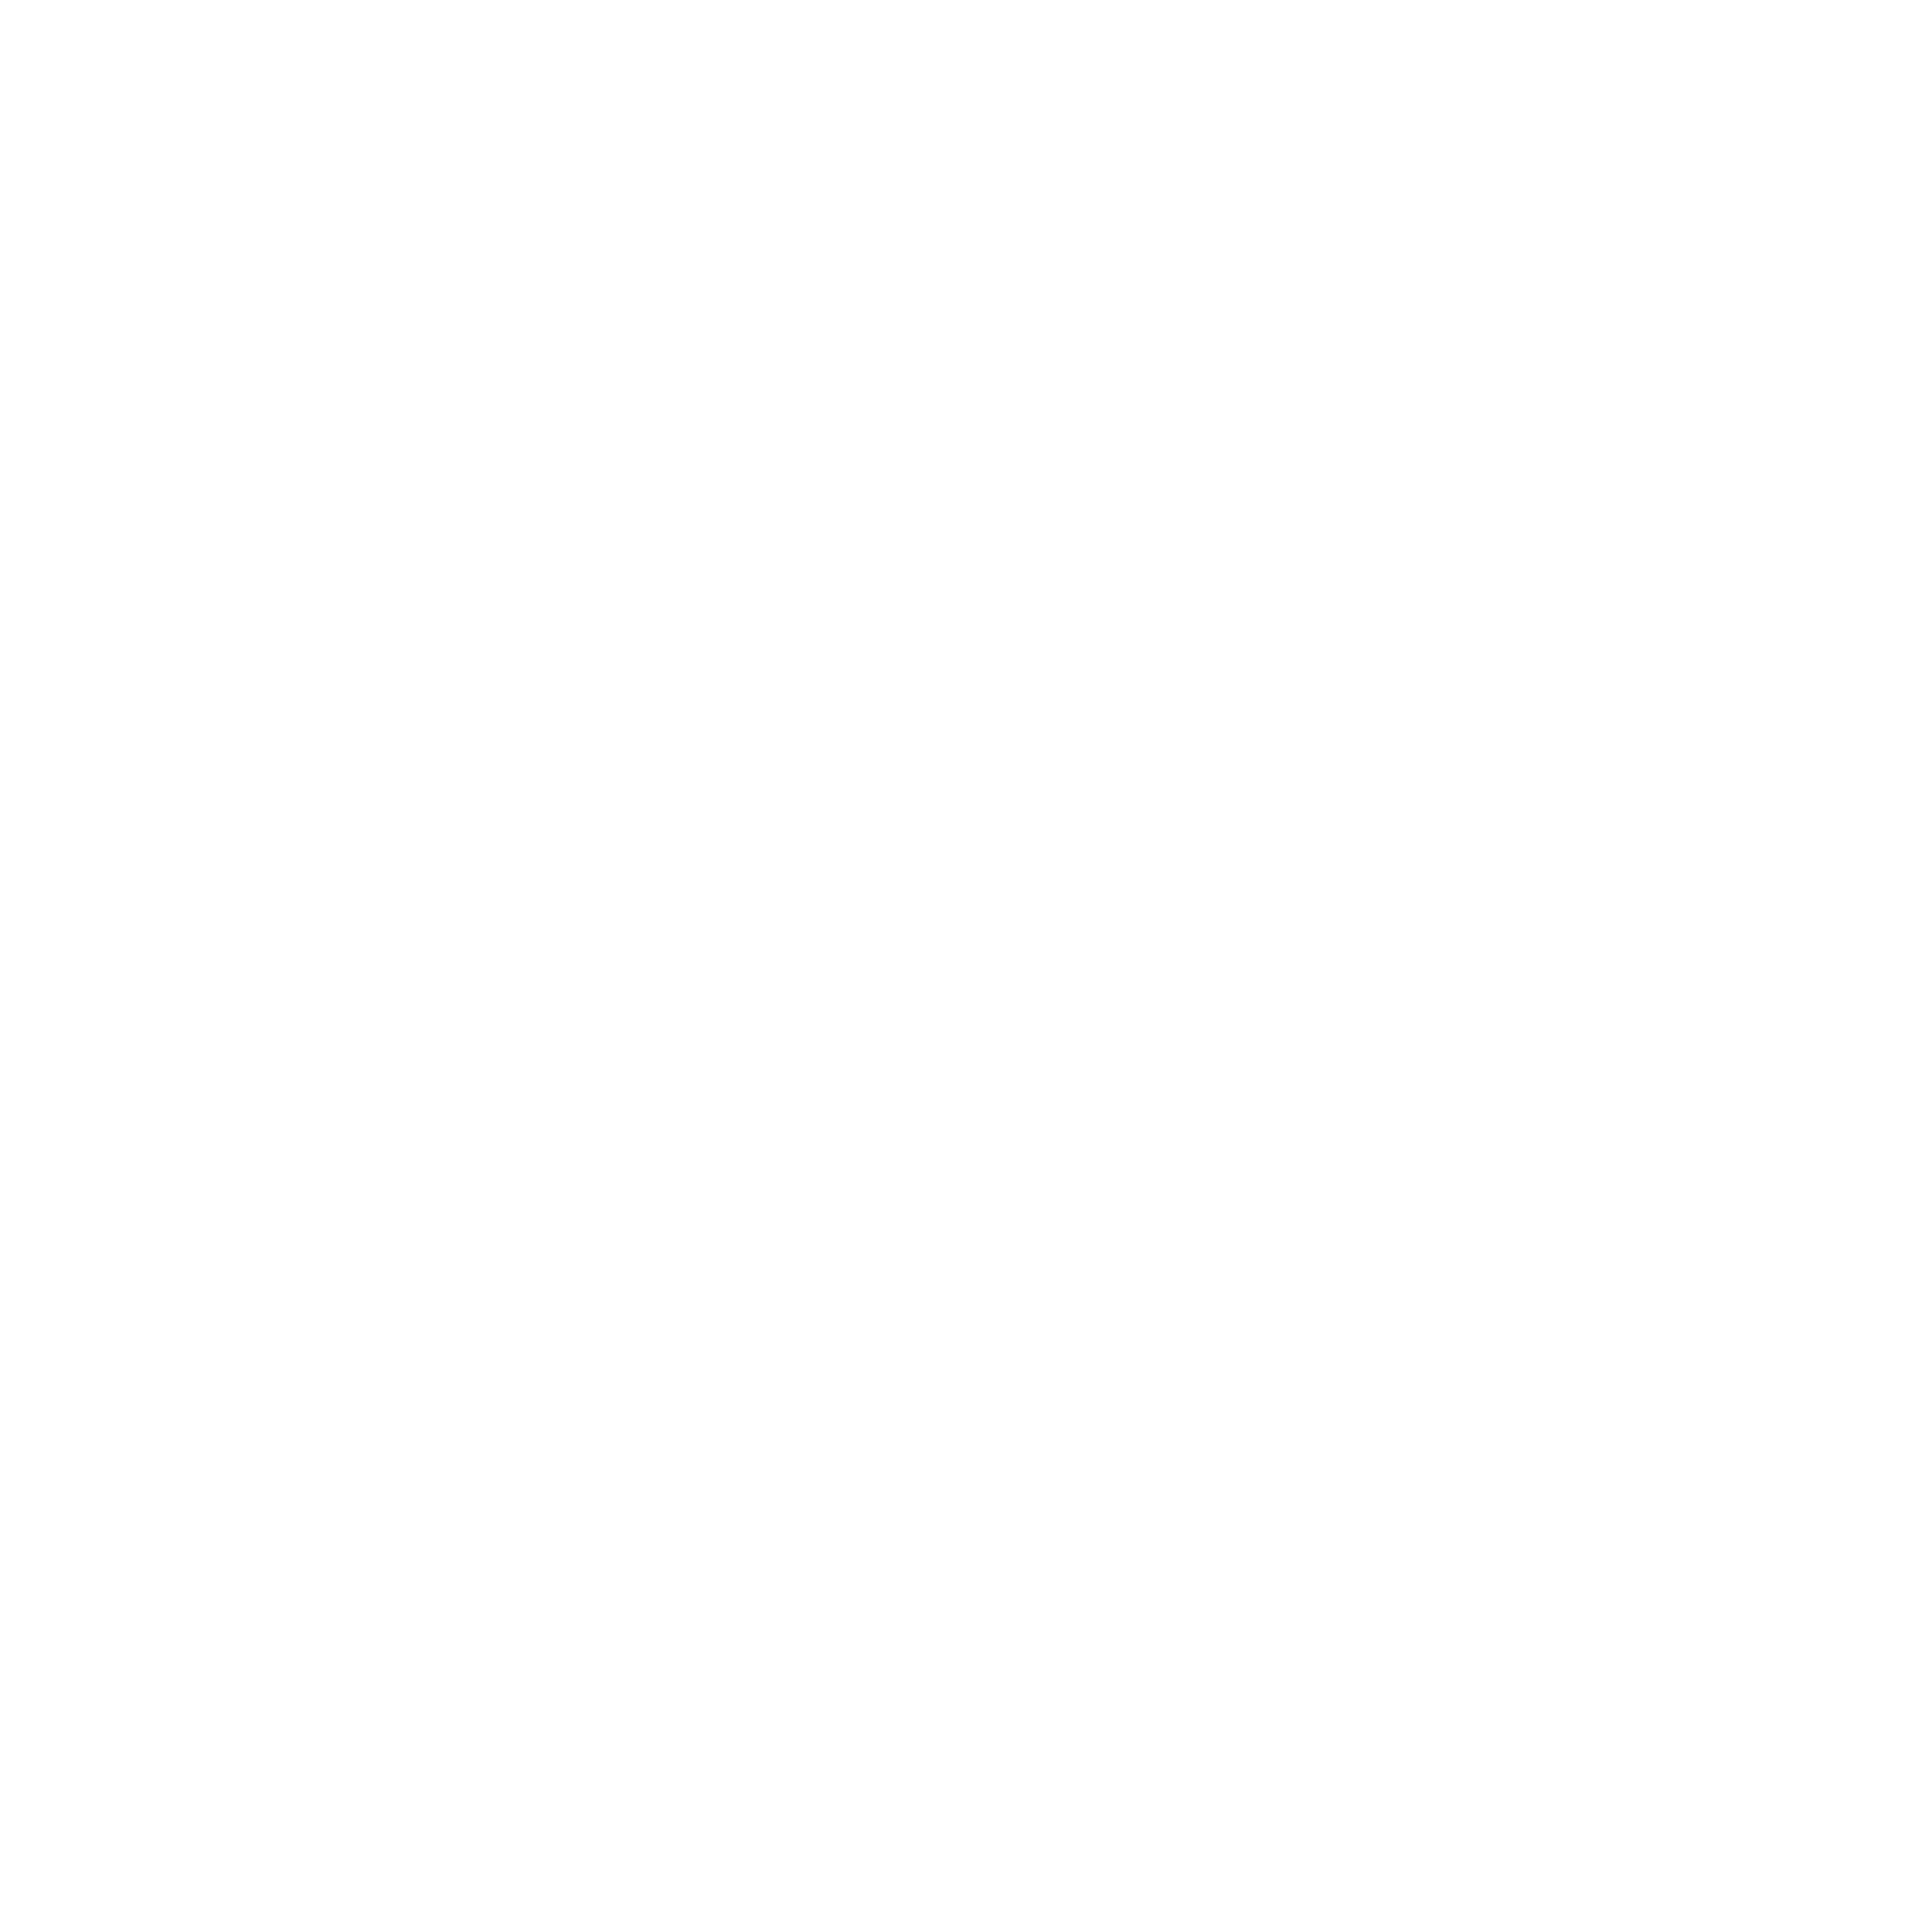 Reconnaissance Logo - Gretchen Husske - Marine Reconnaissance Foundation